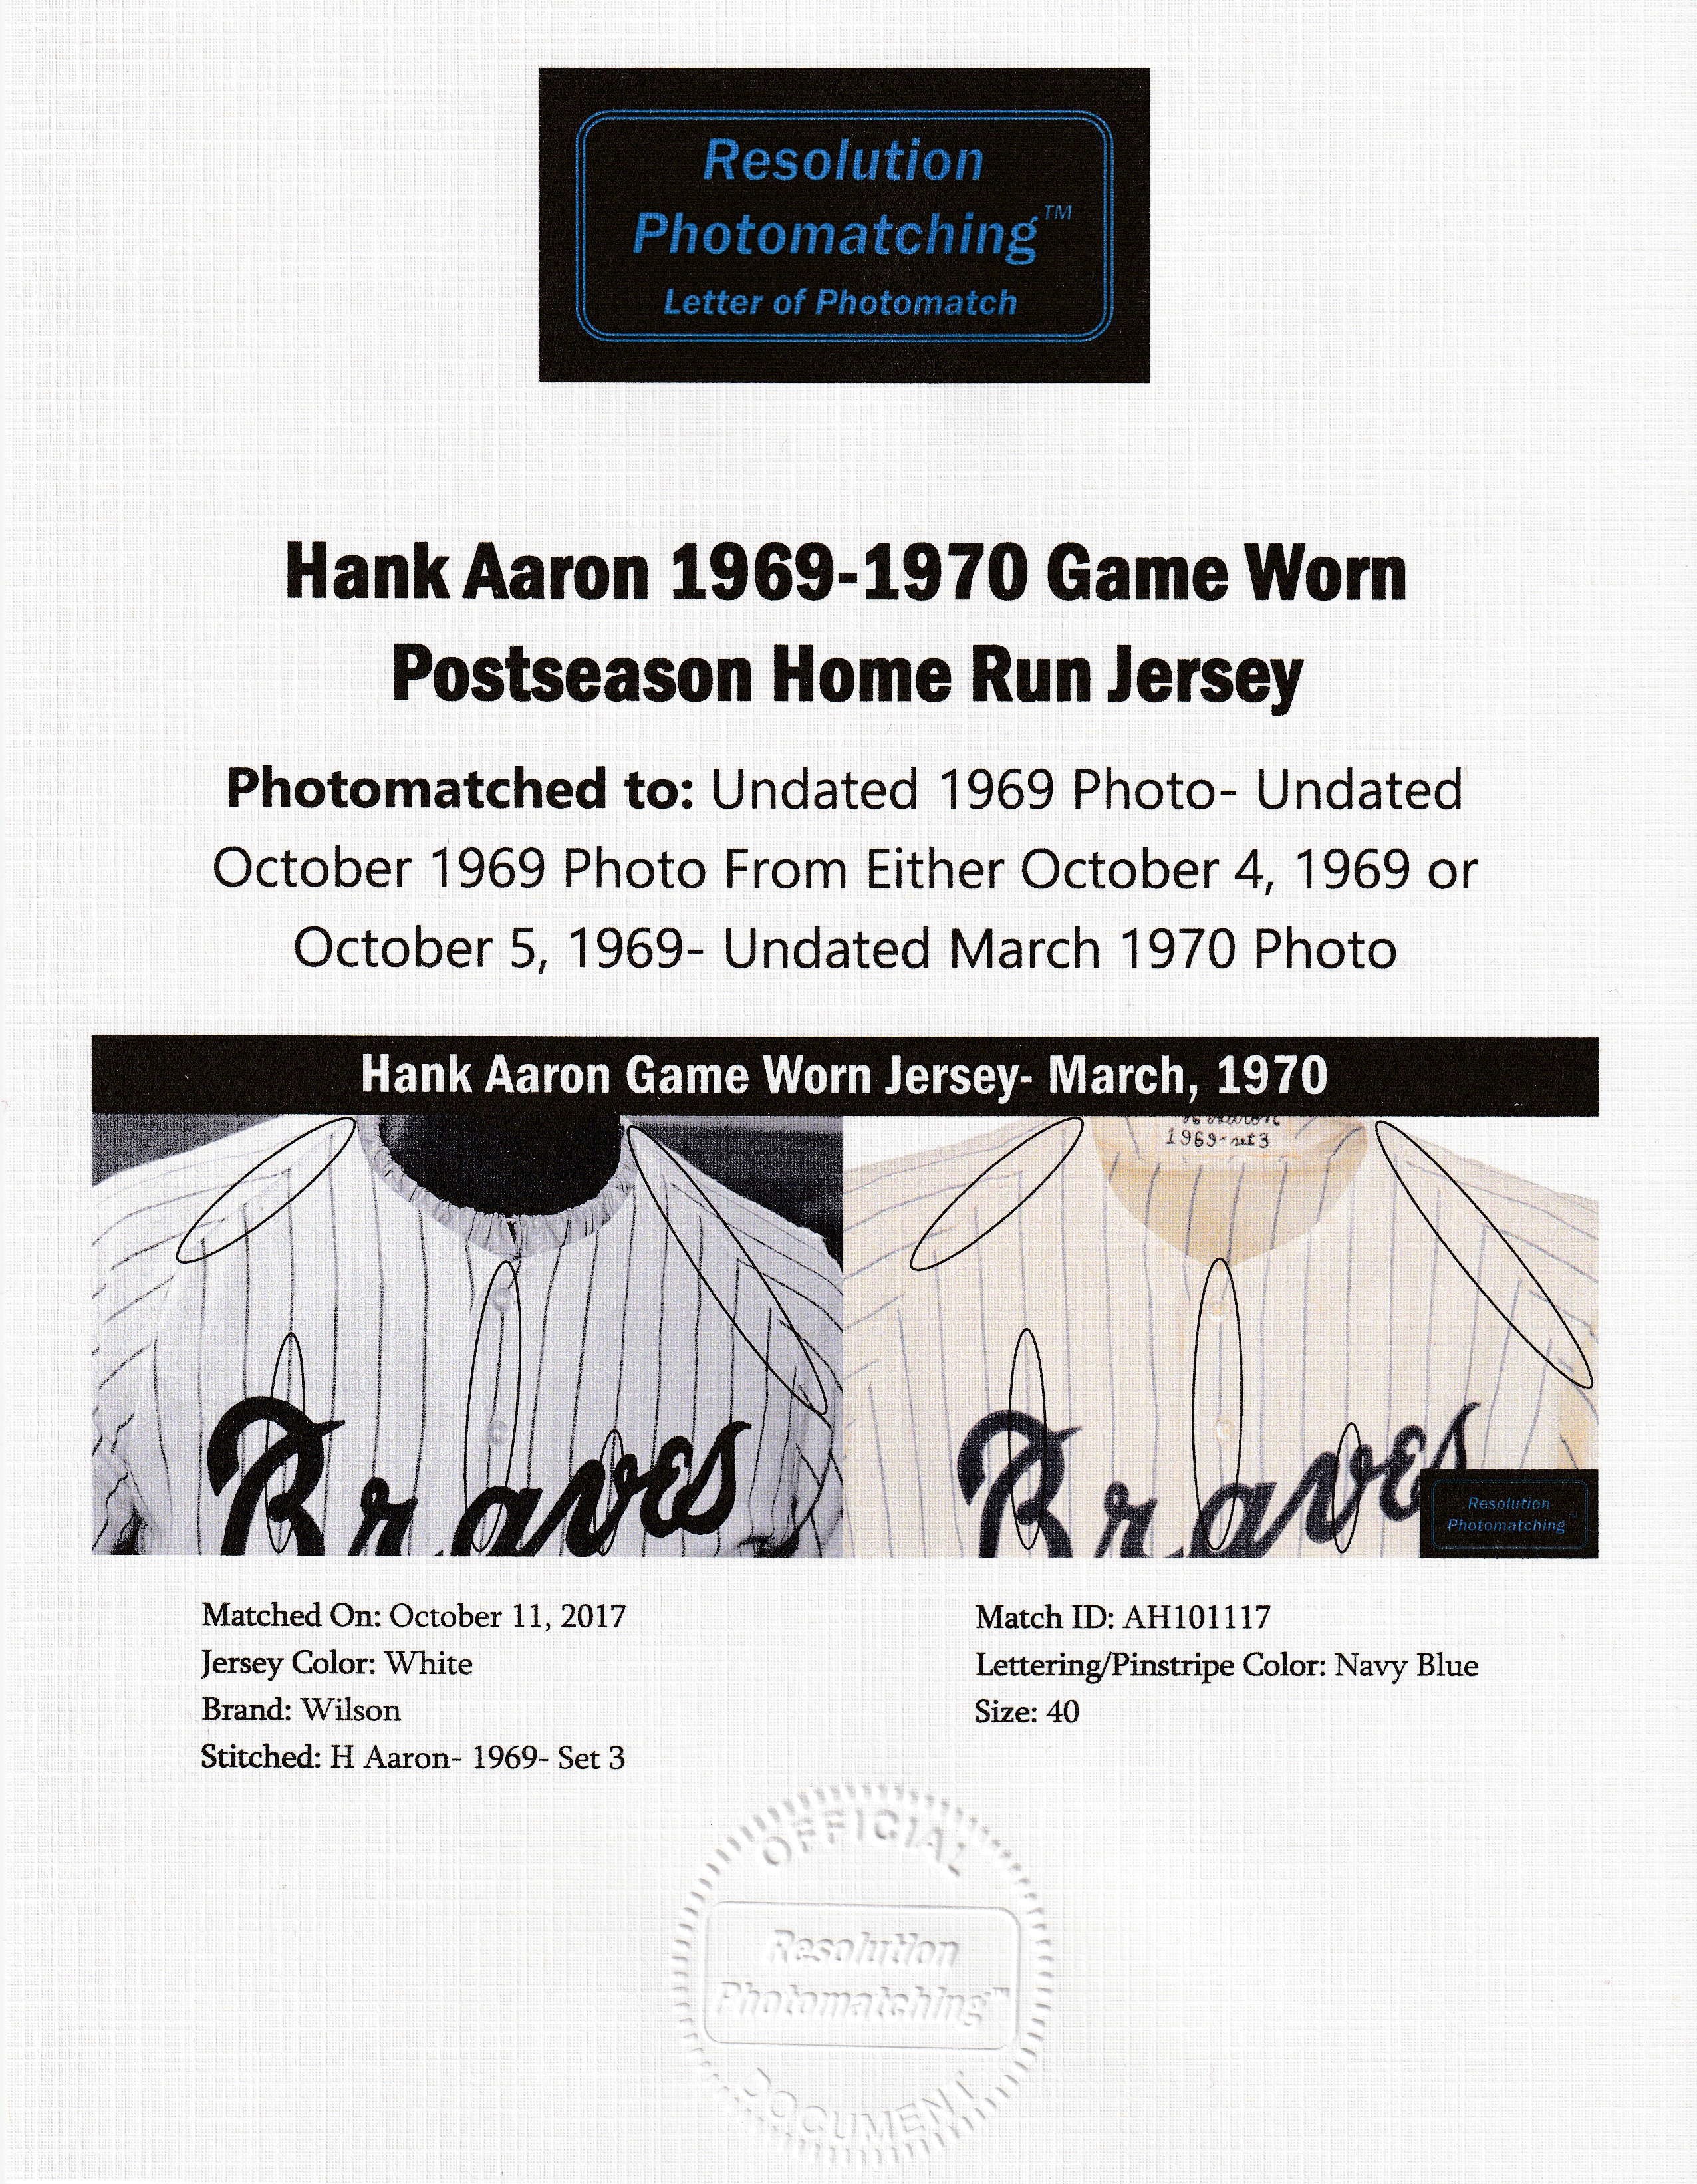 1969 Hank Aaron Atlanta Braves Mitchell and Ness MLB Jersey Size